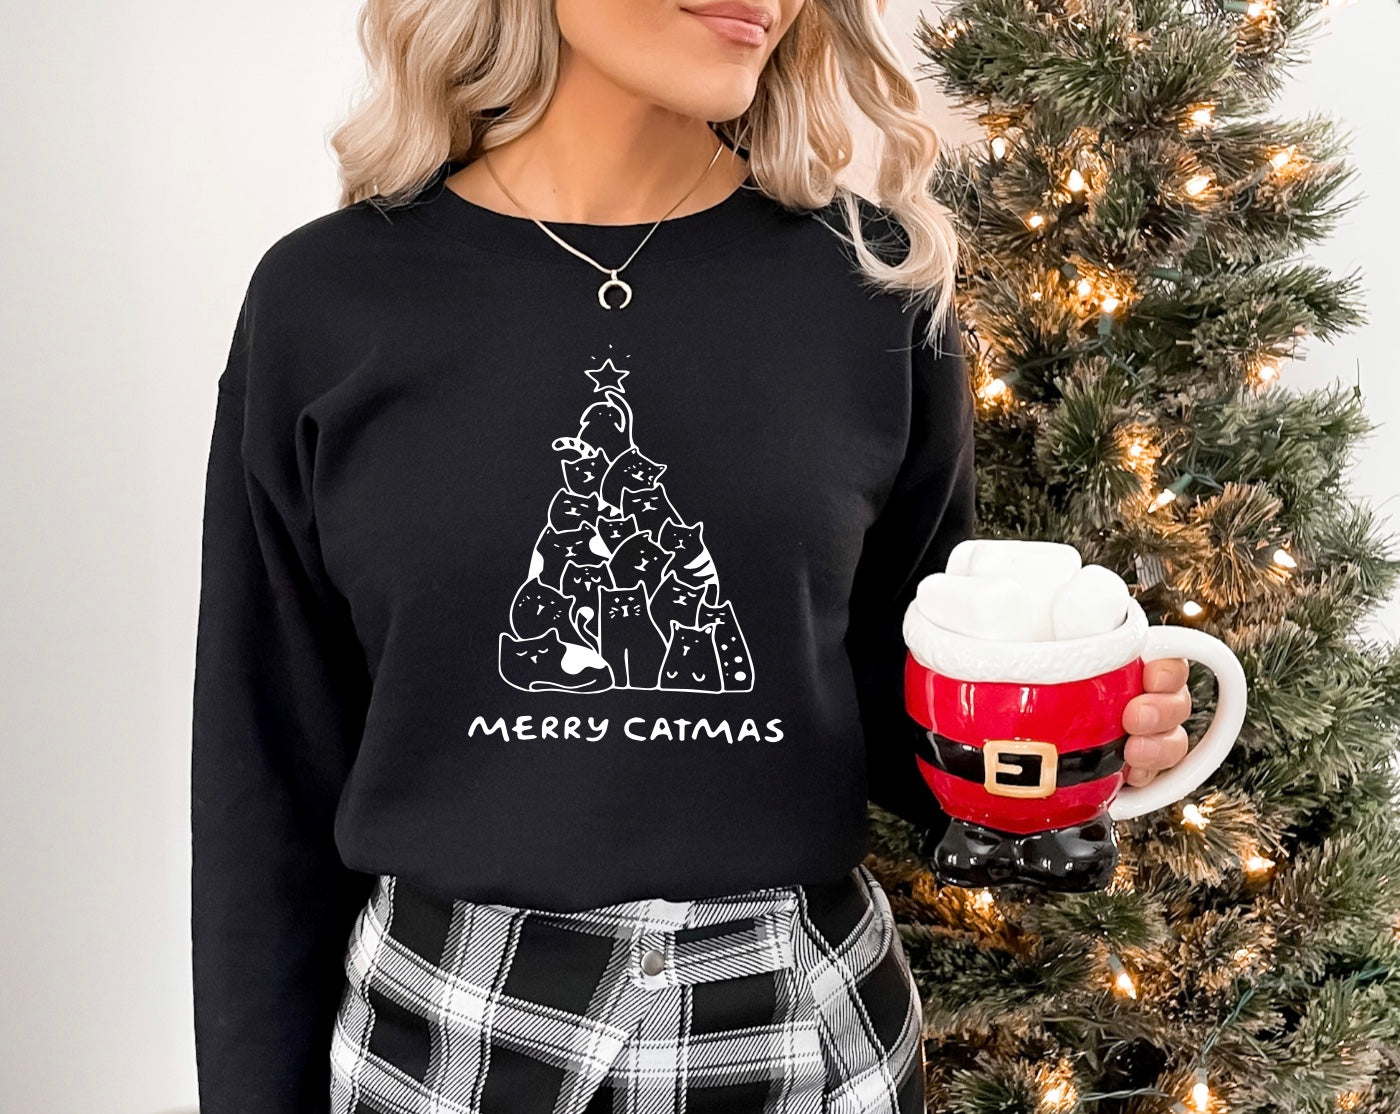 Merry Catmas unisex crewneck sweatshirt in black with white graphic